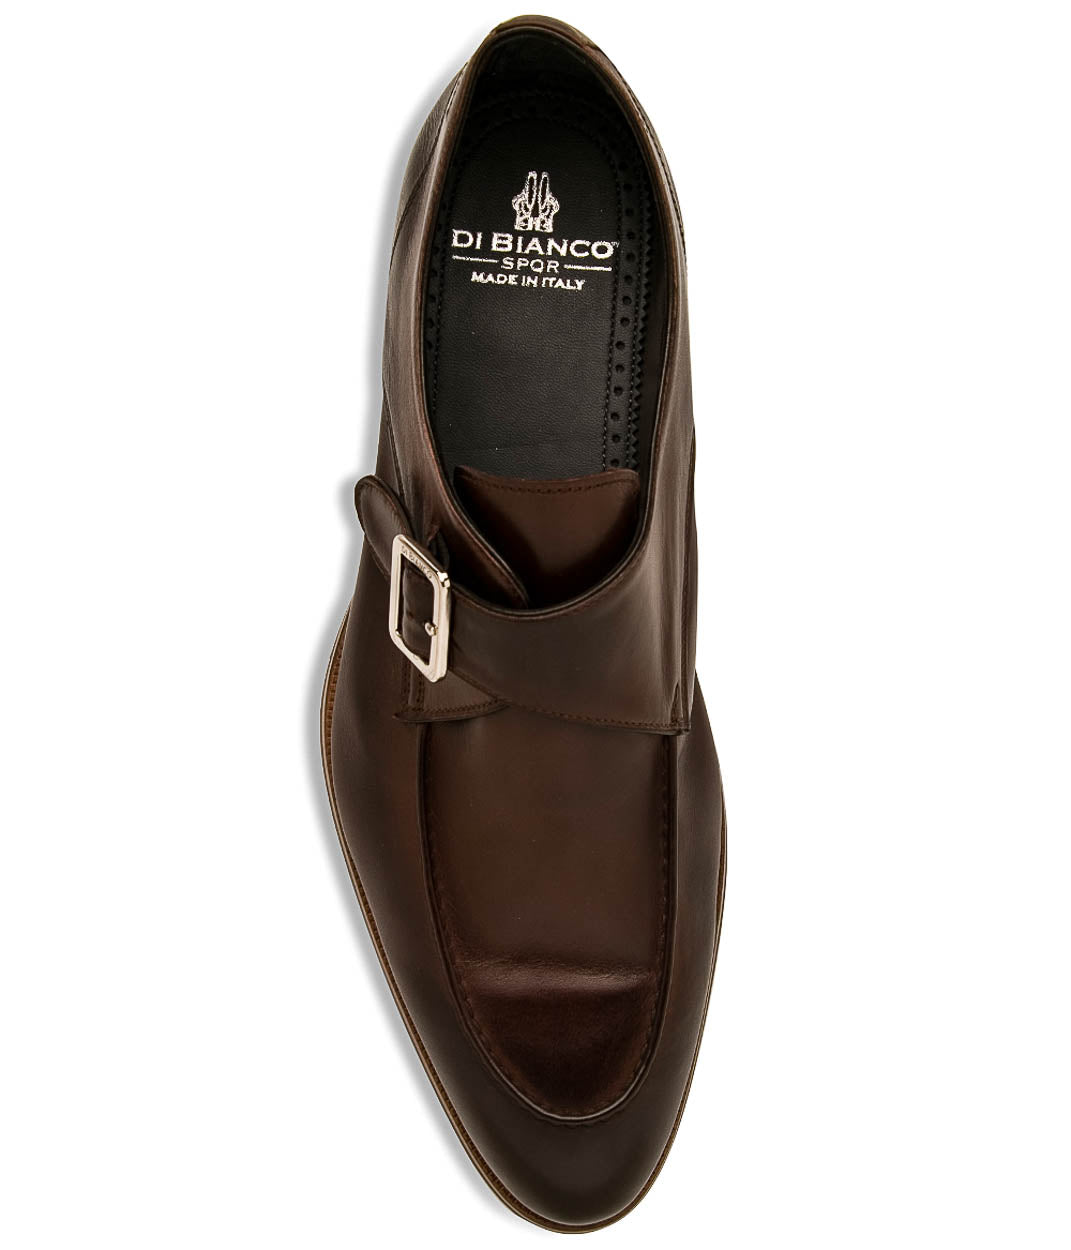 Parma Bolet Leather Single Monk Strap Loafer